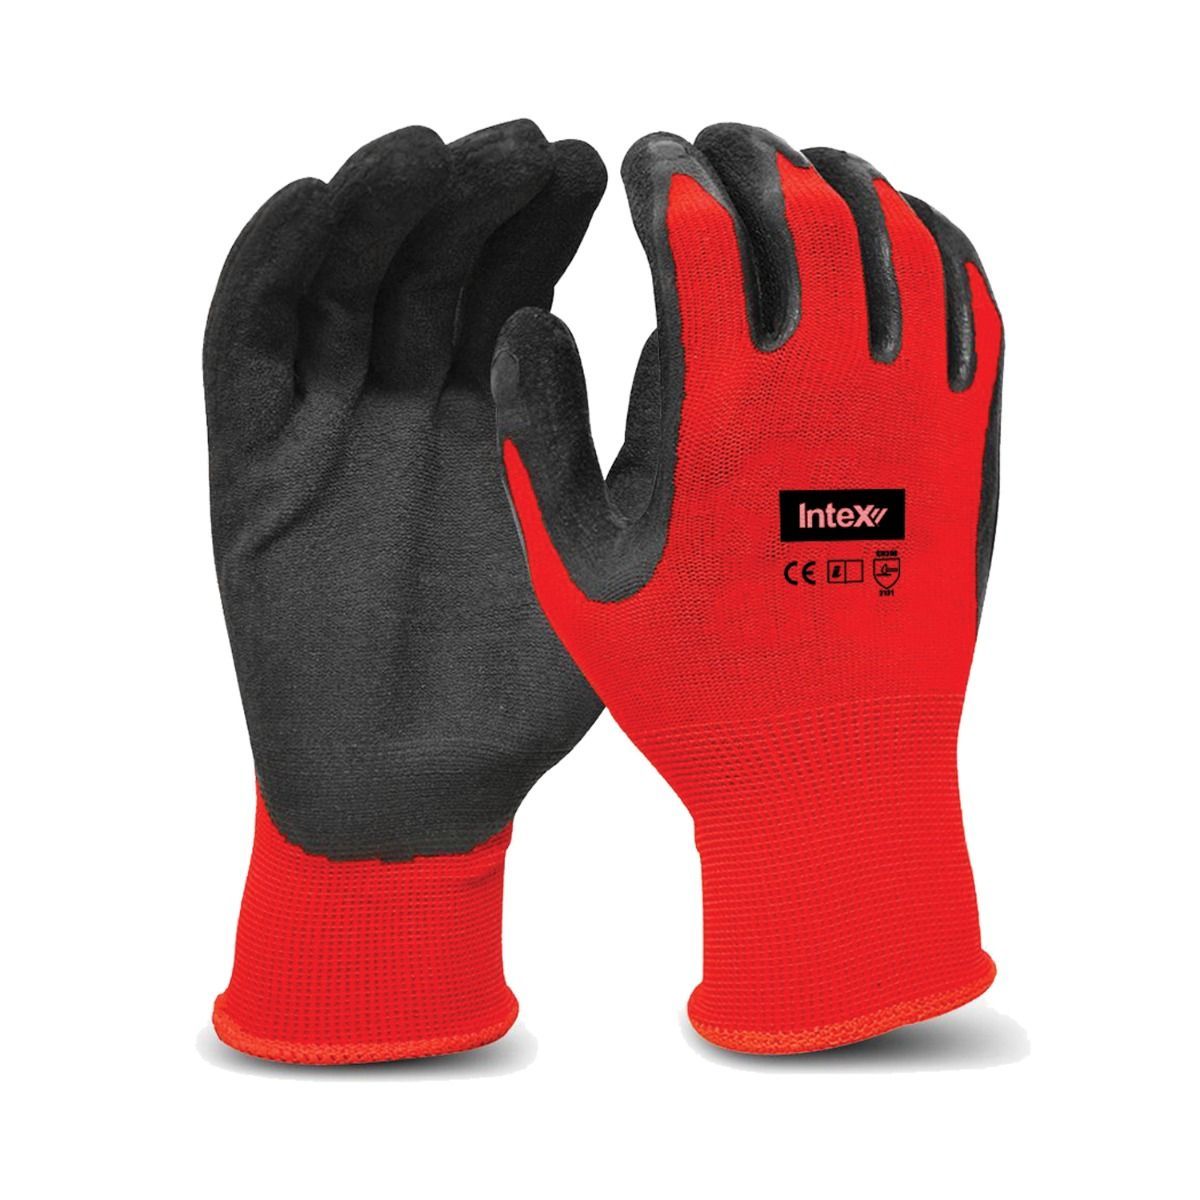 Intex ProtecX® All Purpose Glove with MegaGrip Latex Coating